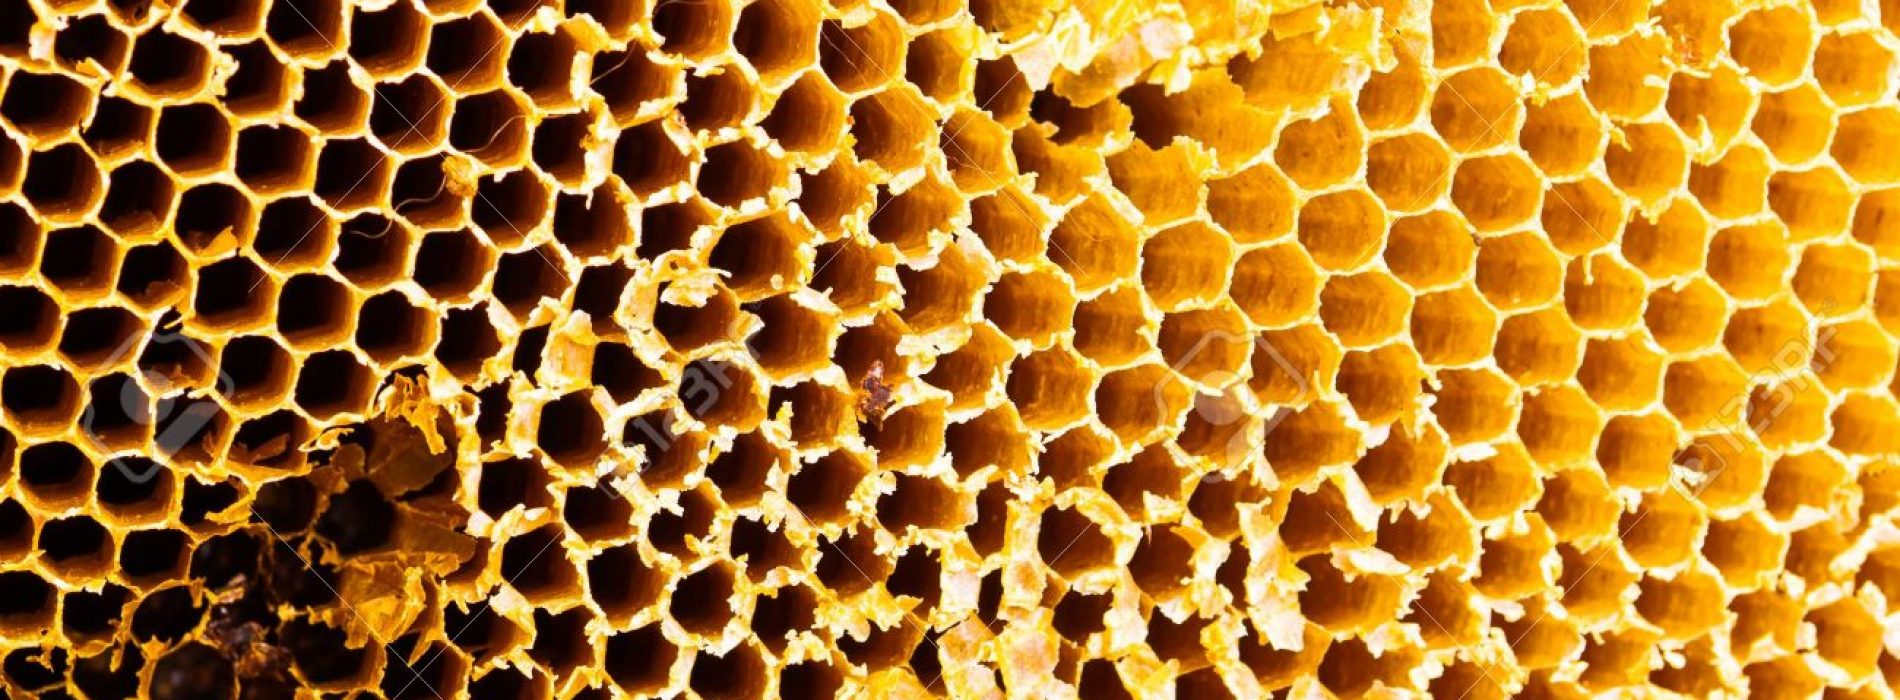 Let op: Honing bevat plastic